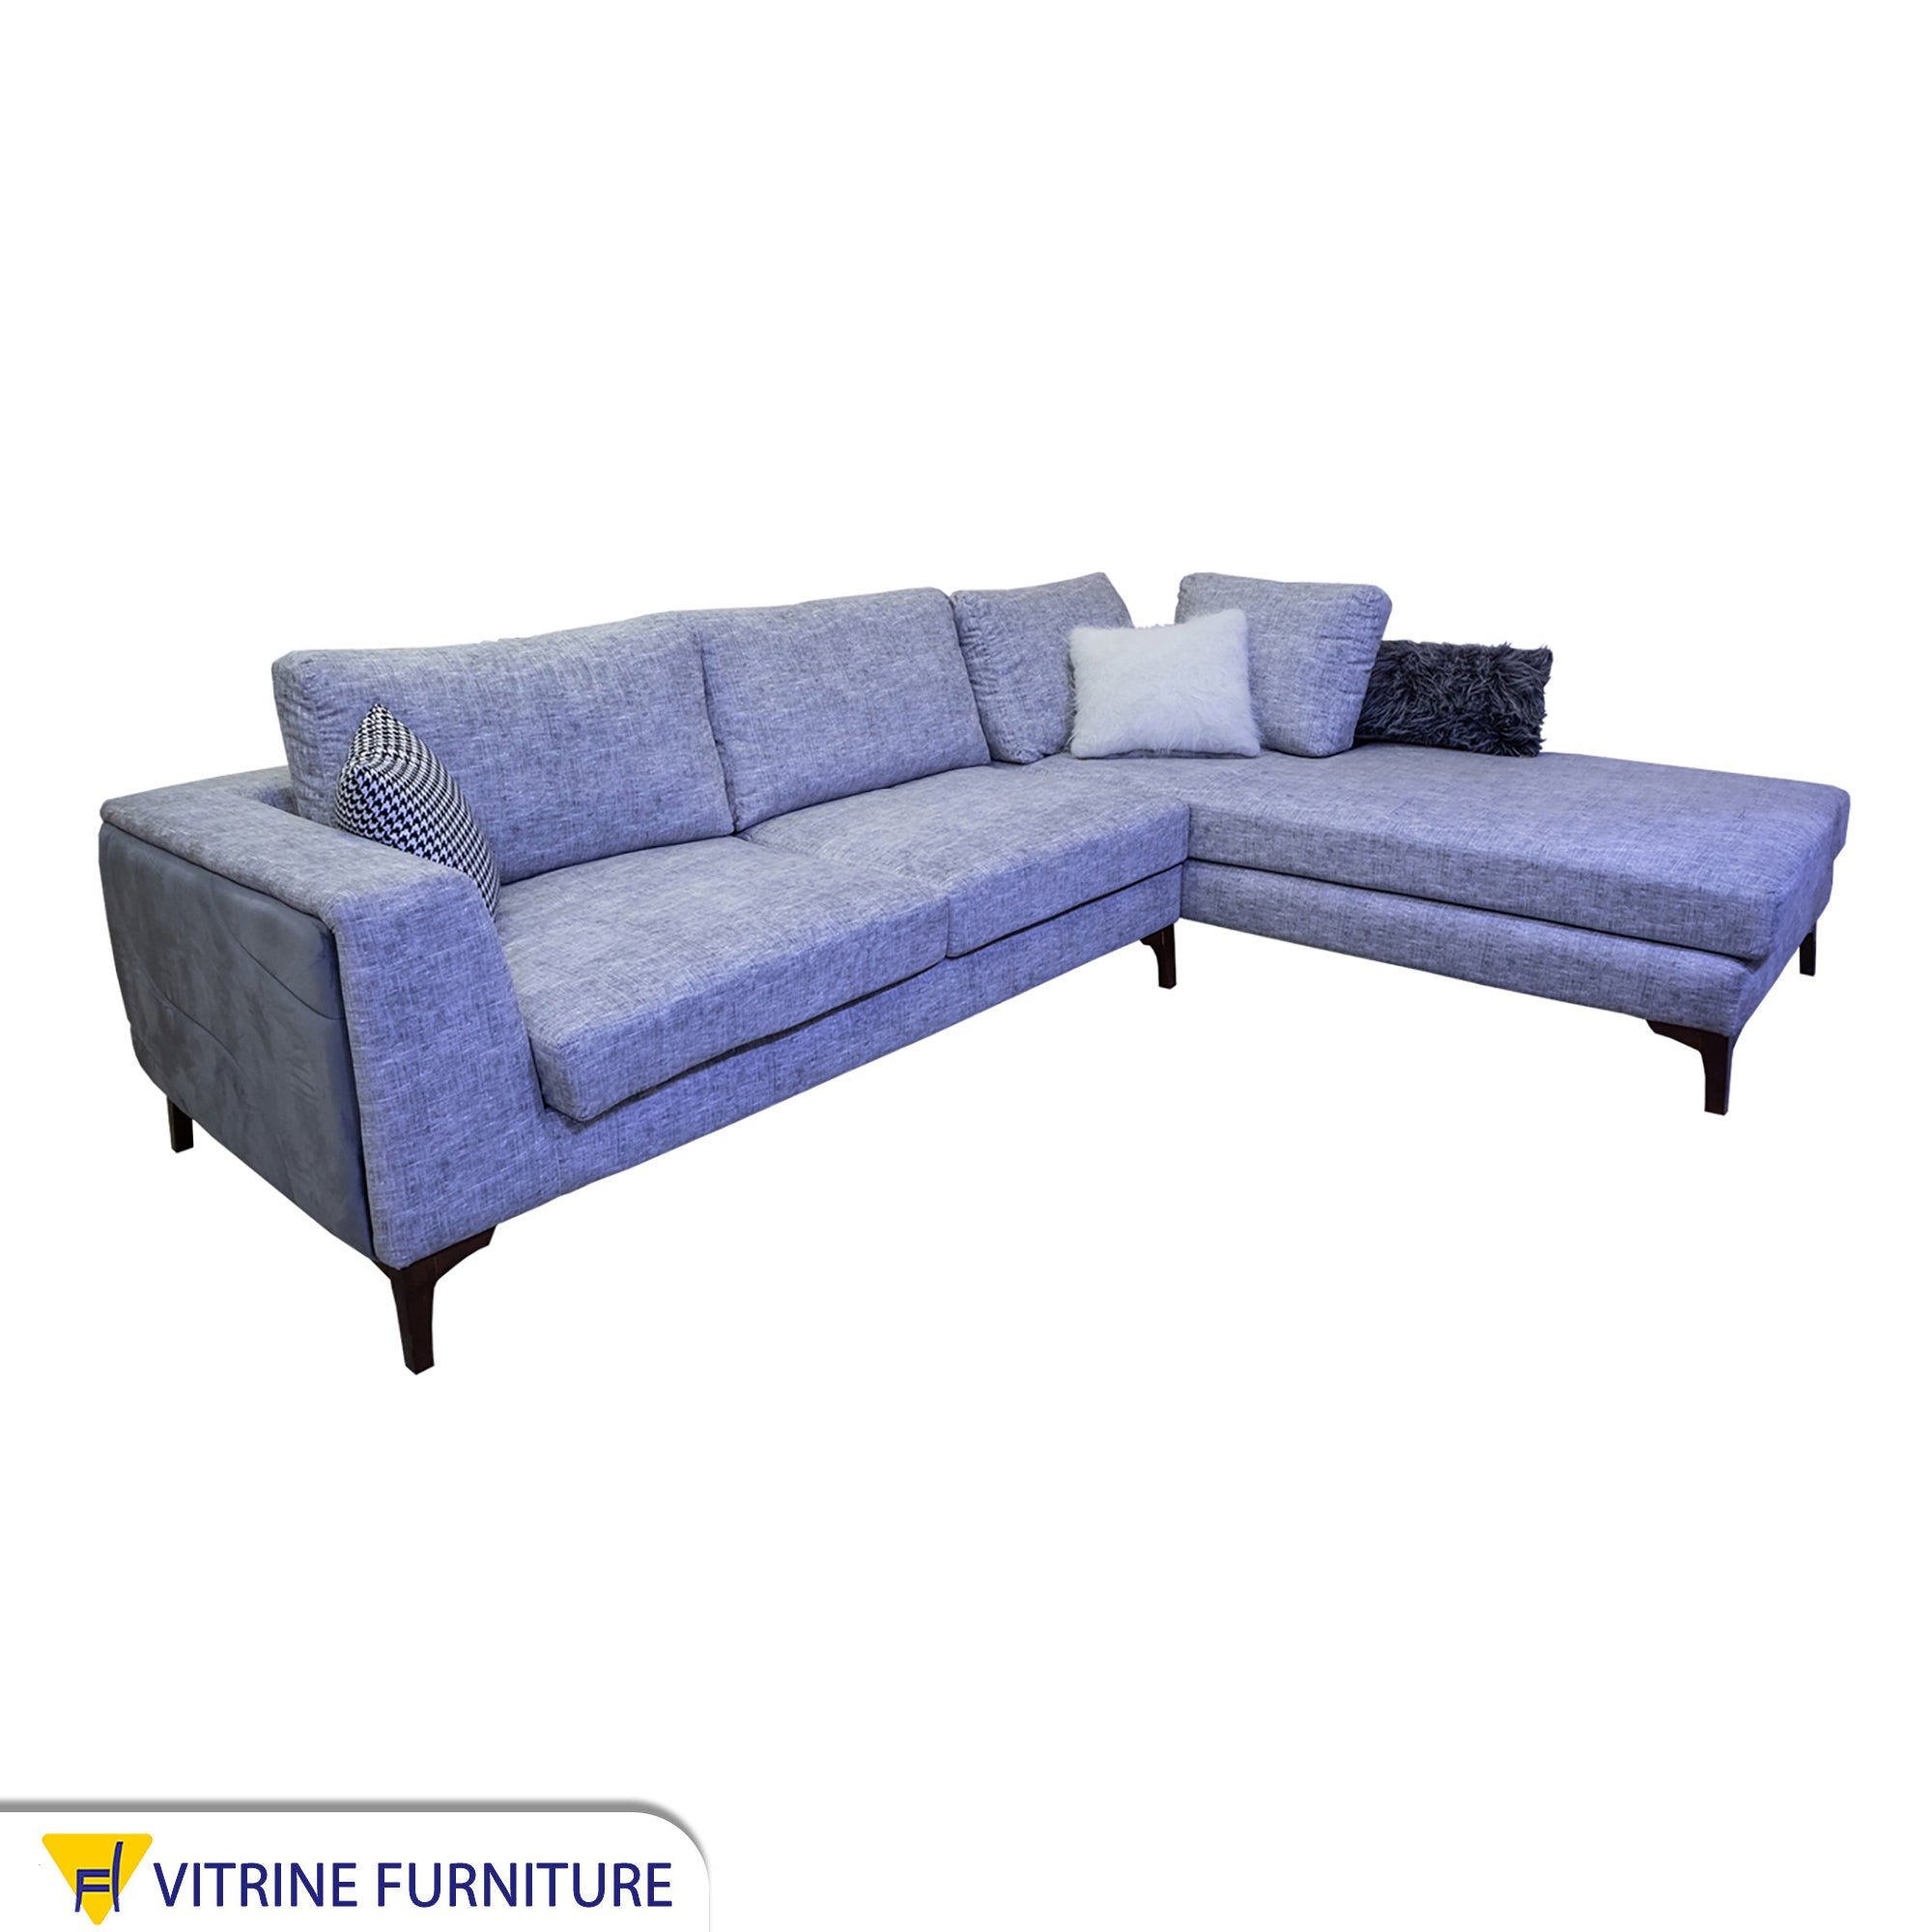 Corner sofa with high legs